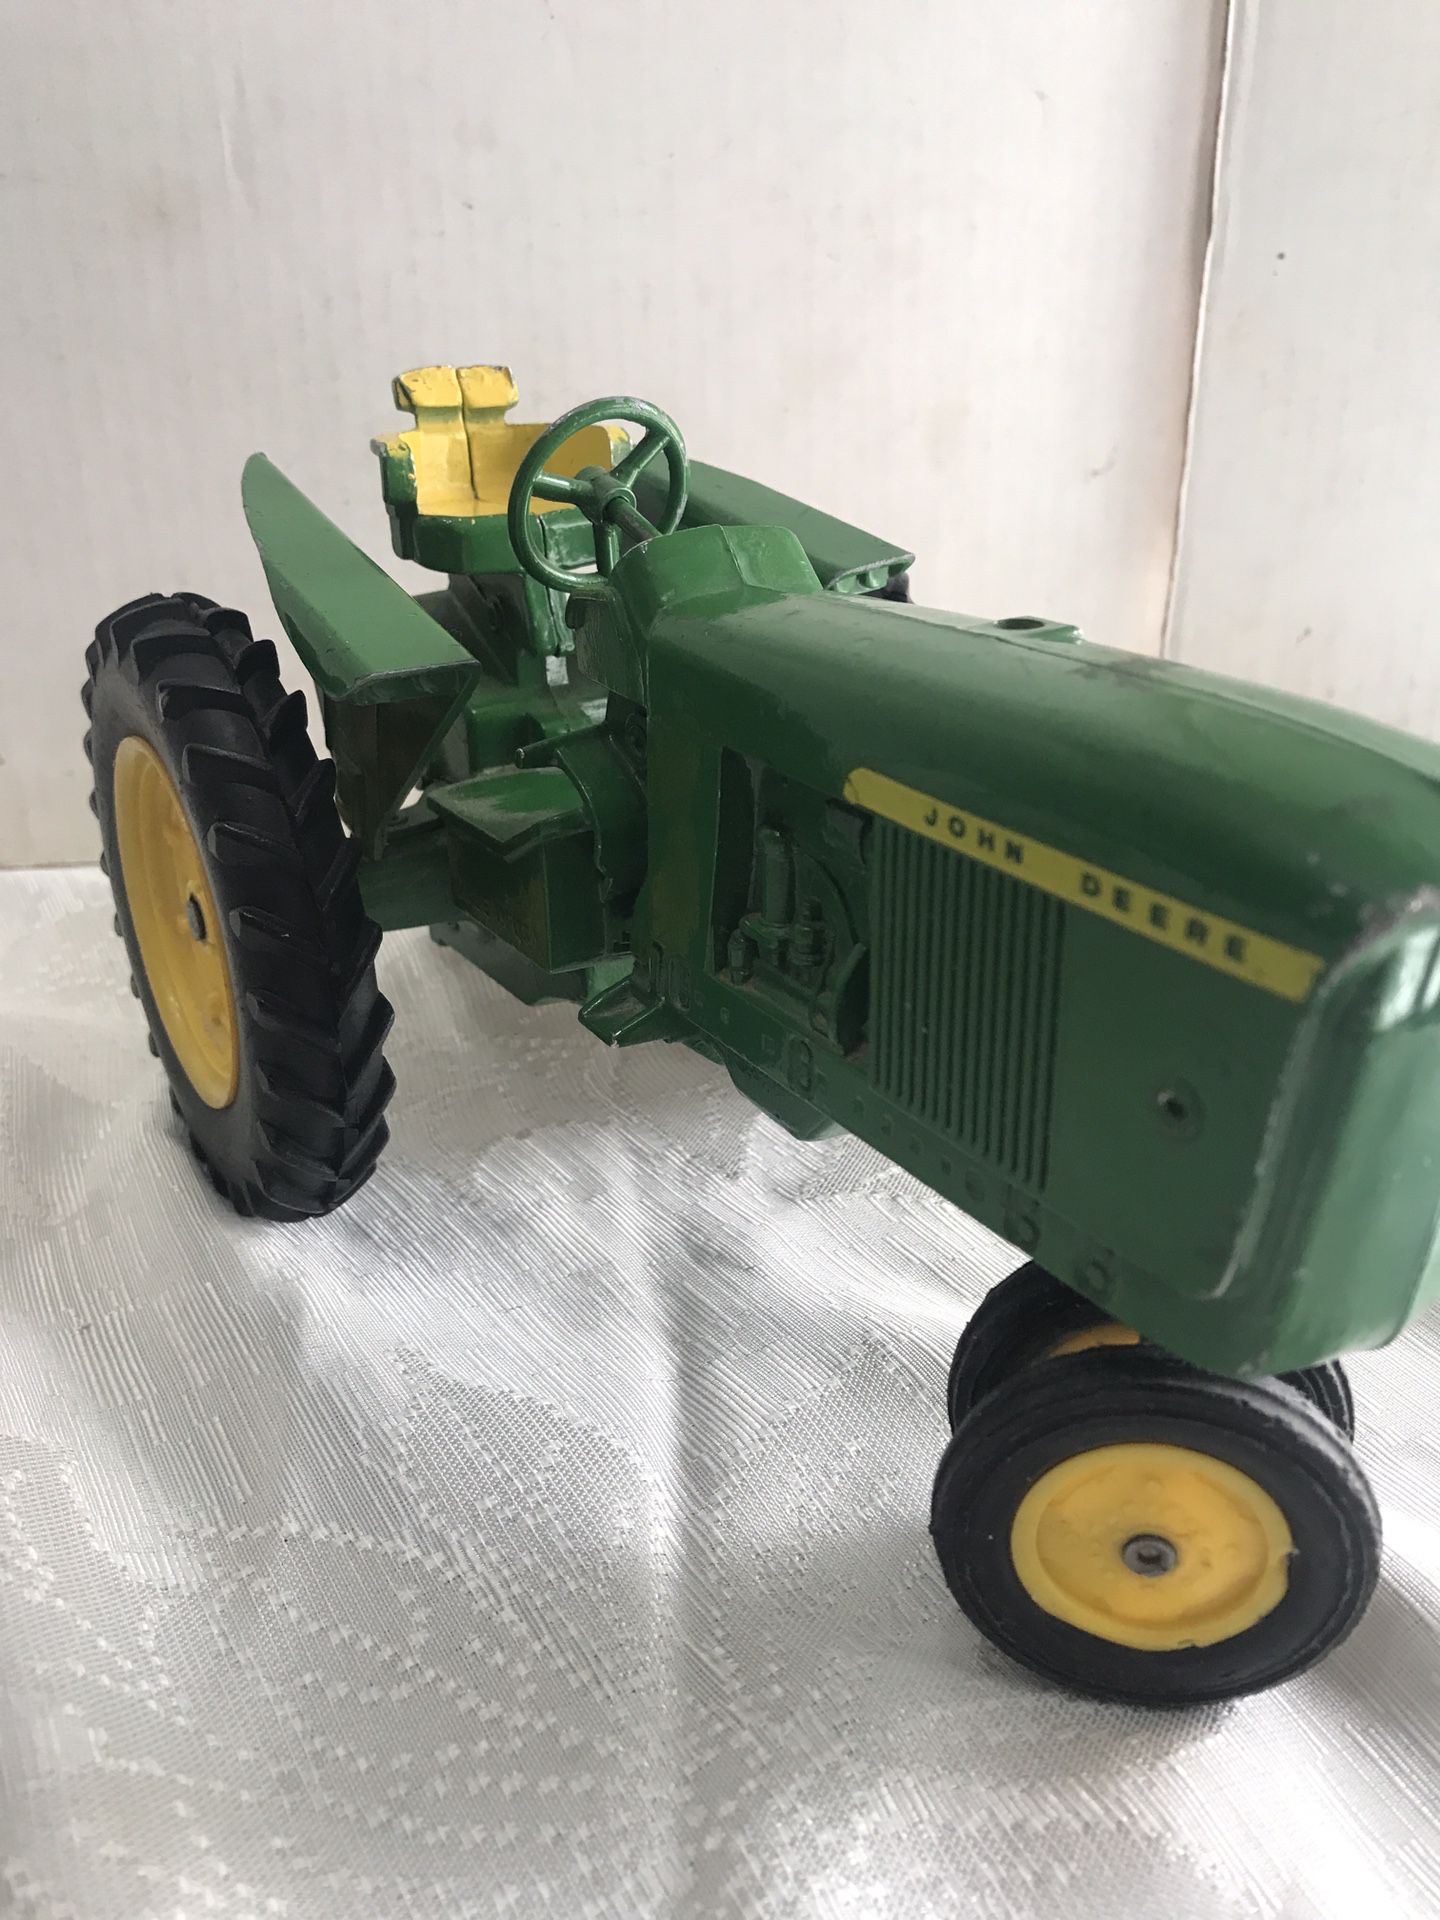 Vintage John Deere Farm Tractor